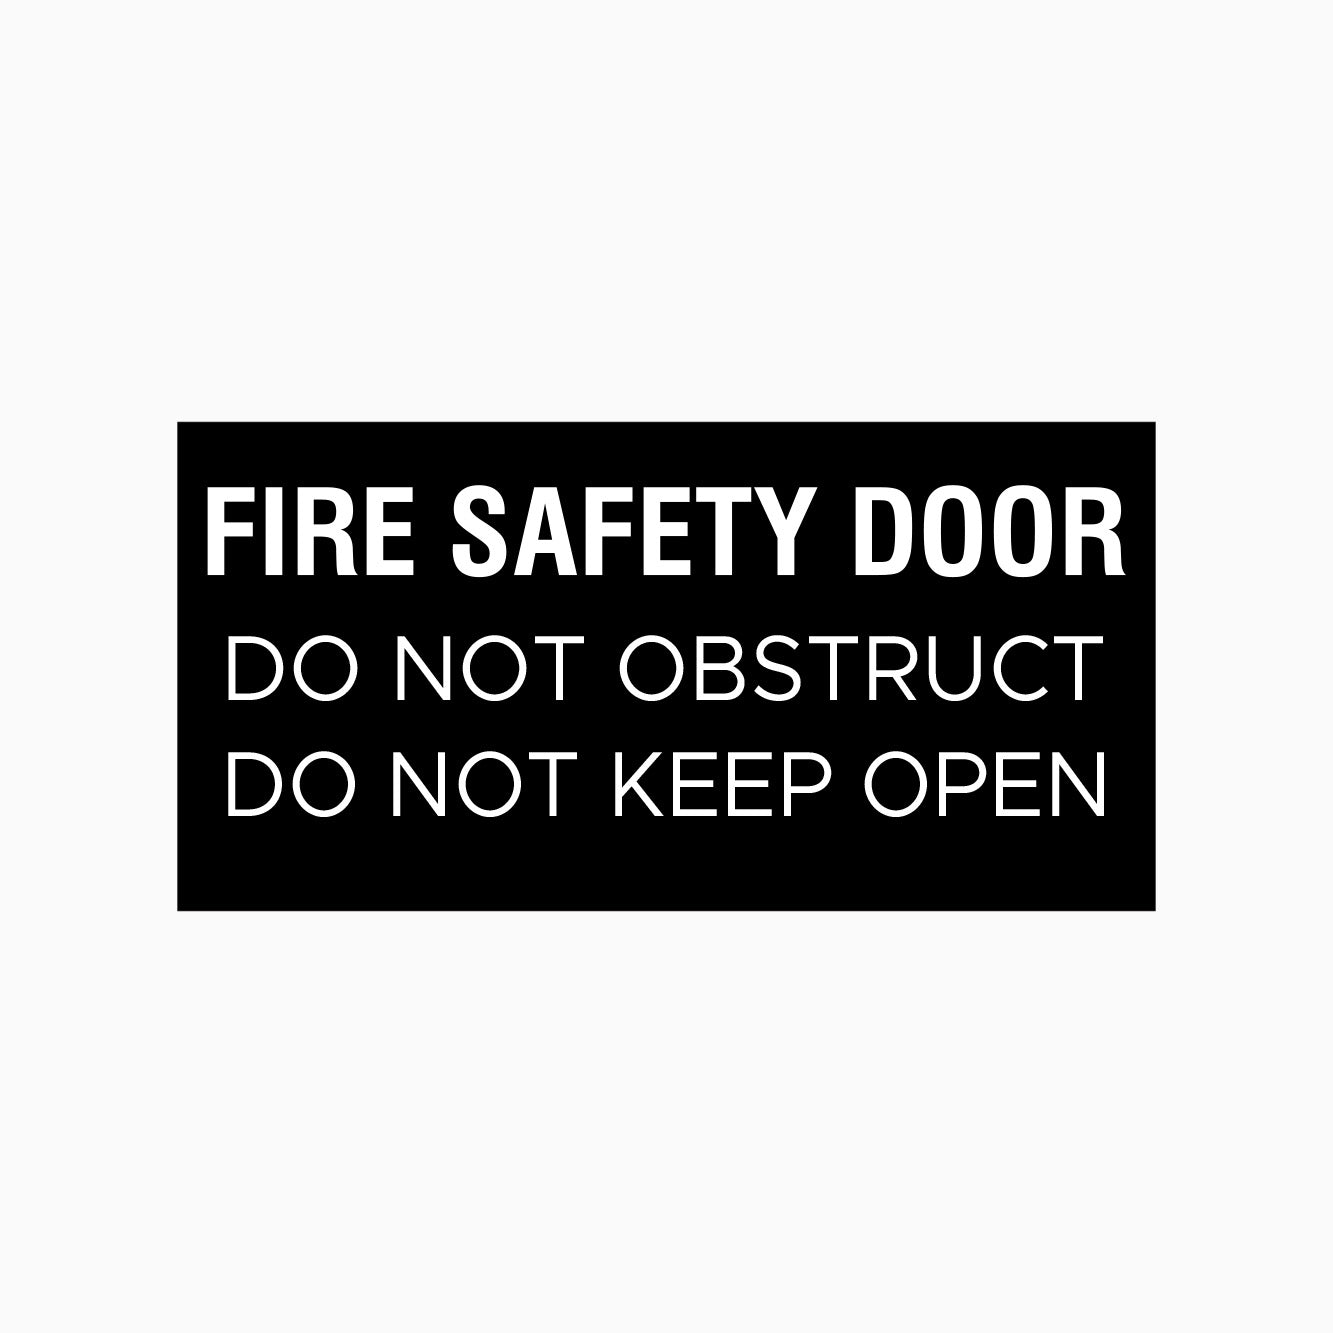 FIRE SAFETY DOOR SIGN - DO NOT OBSTRUCT - DO NOT KEEP OPEN  SIGN